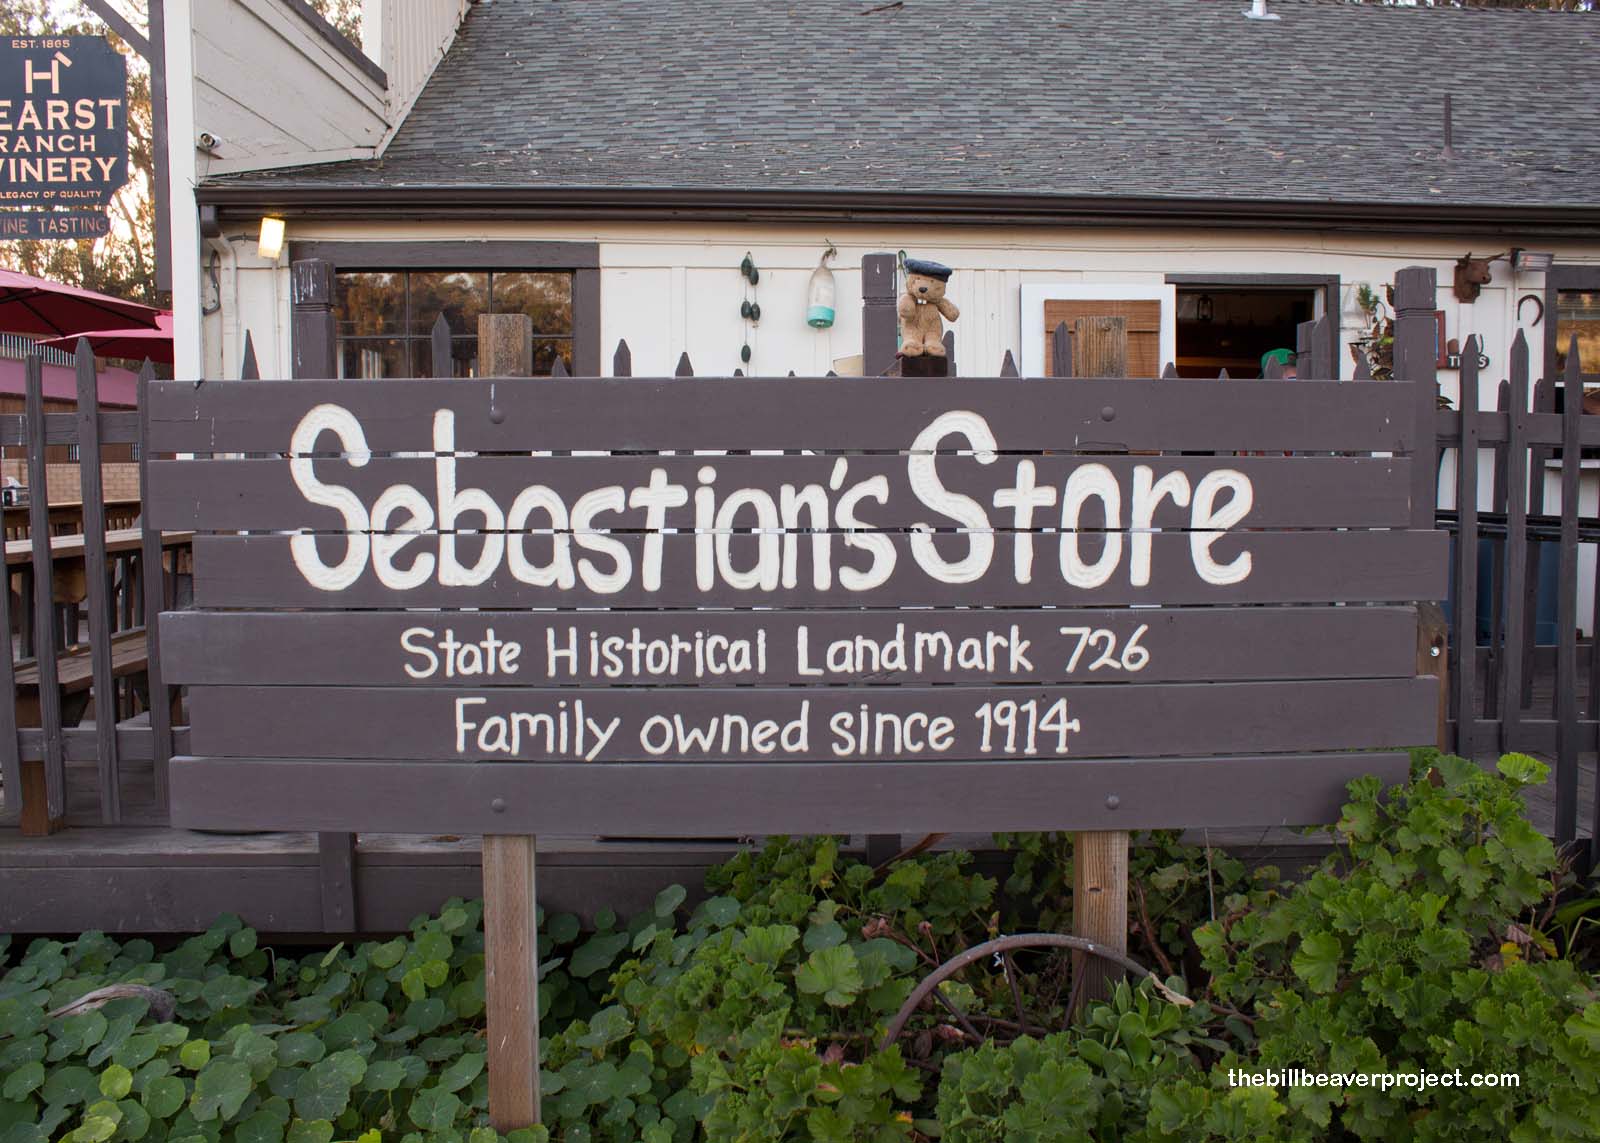 The Sebastian Store